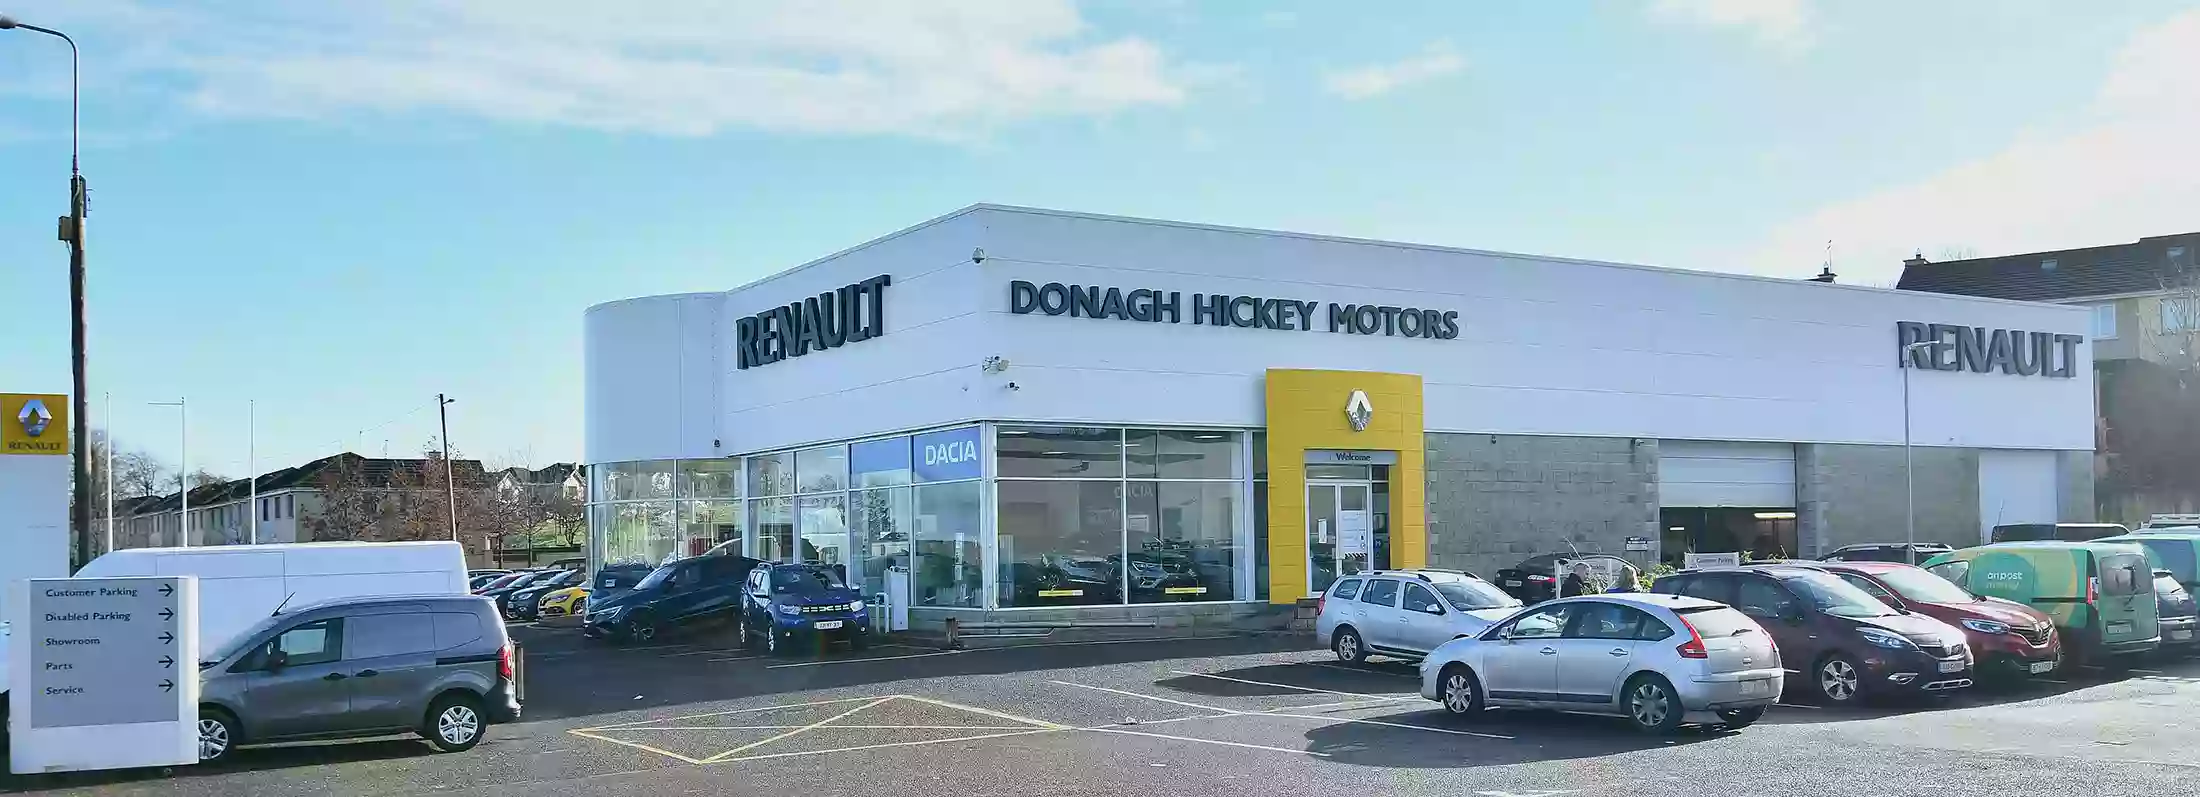 Donagh Hickey Motors Renault